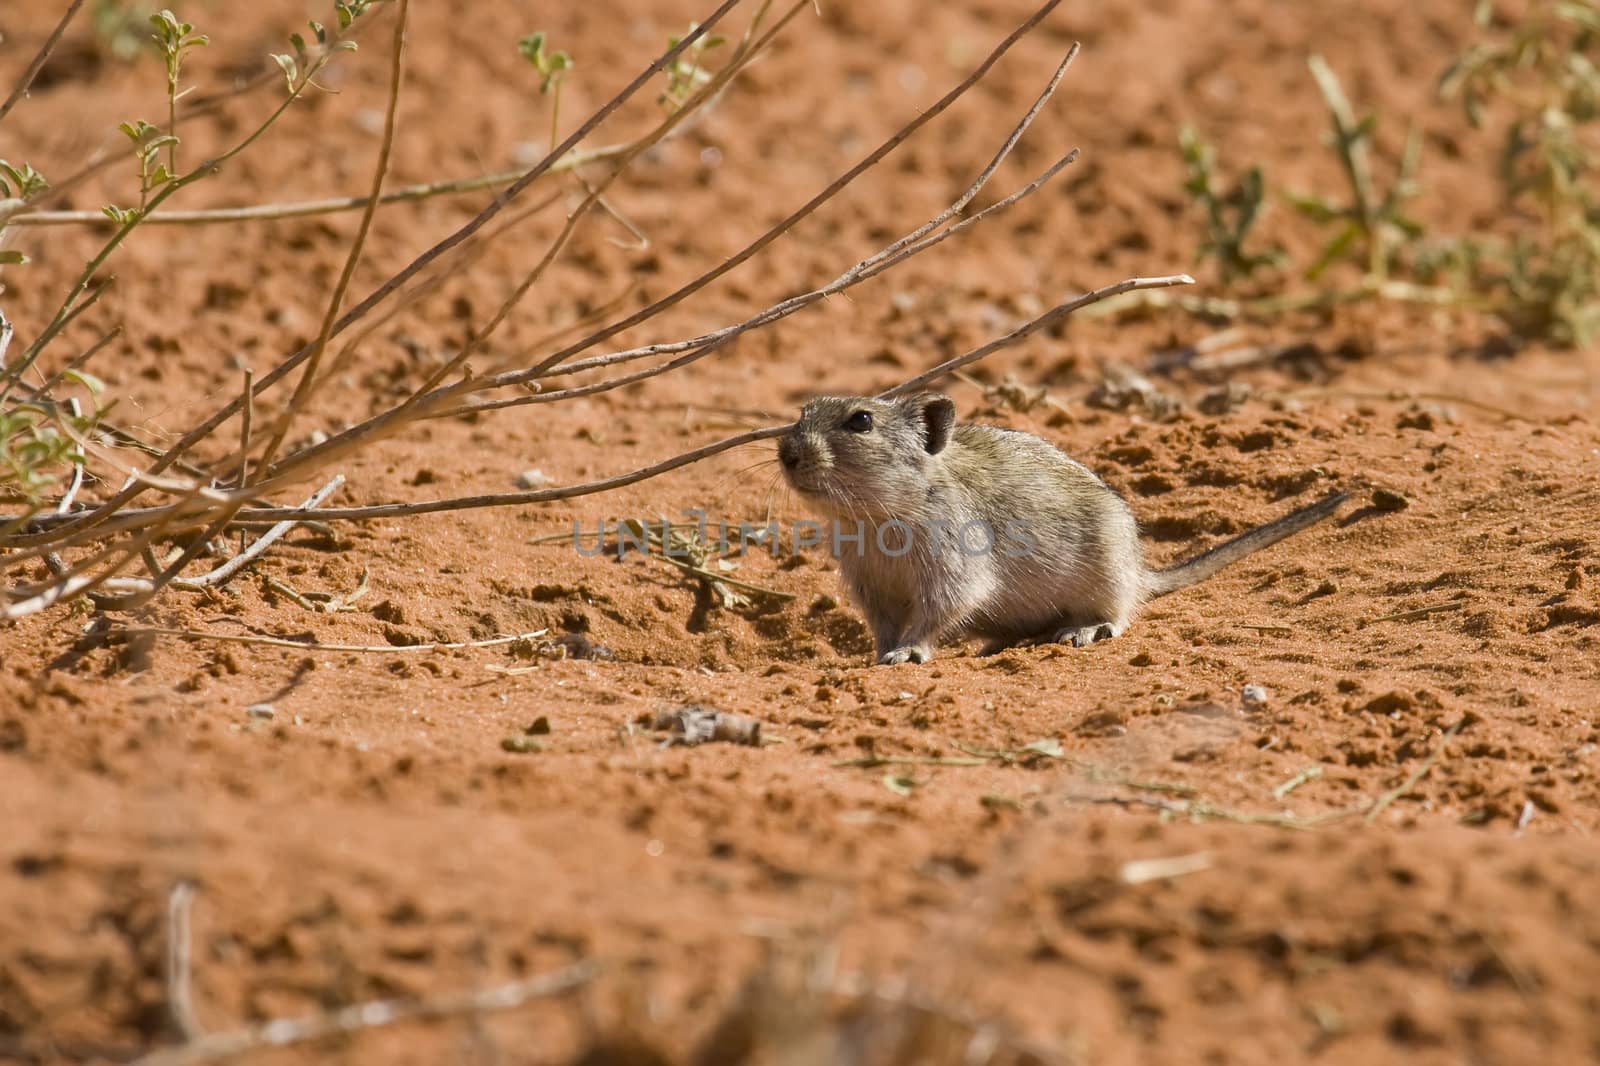 Desert Pygmy Mouse by nightowlza